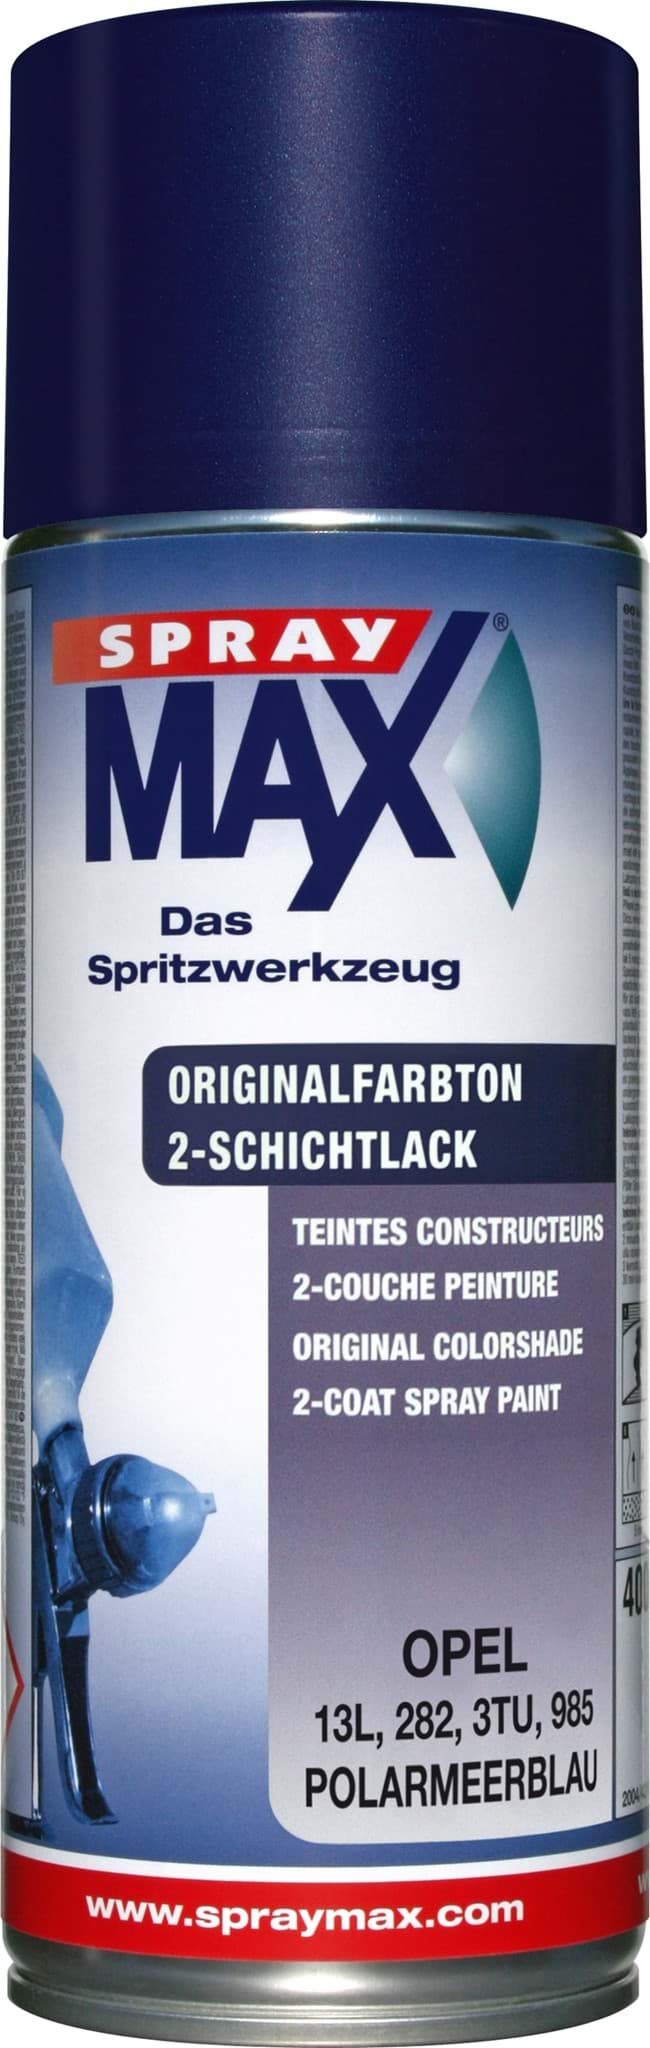 Picture of SprayMax Originalfarbton für Opel 282 polarmeerblau